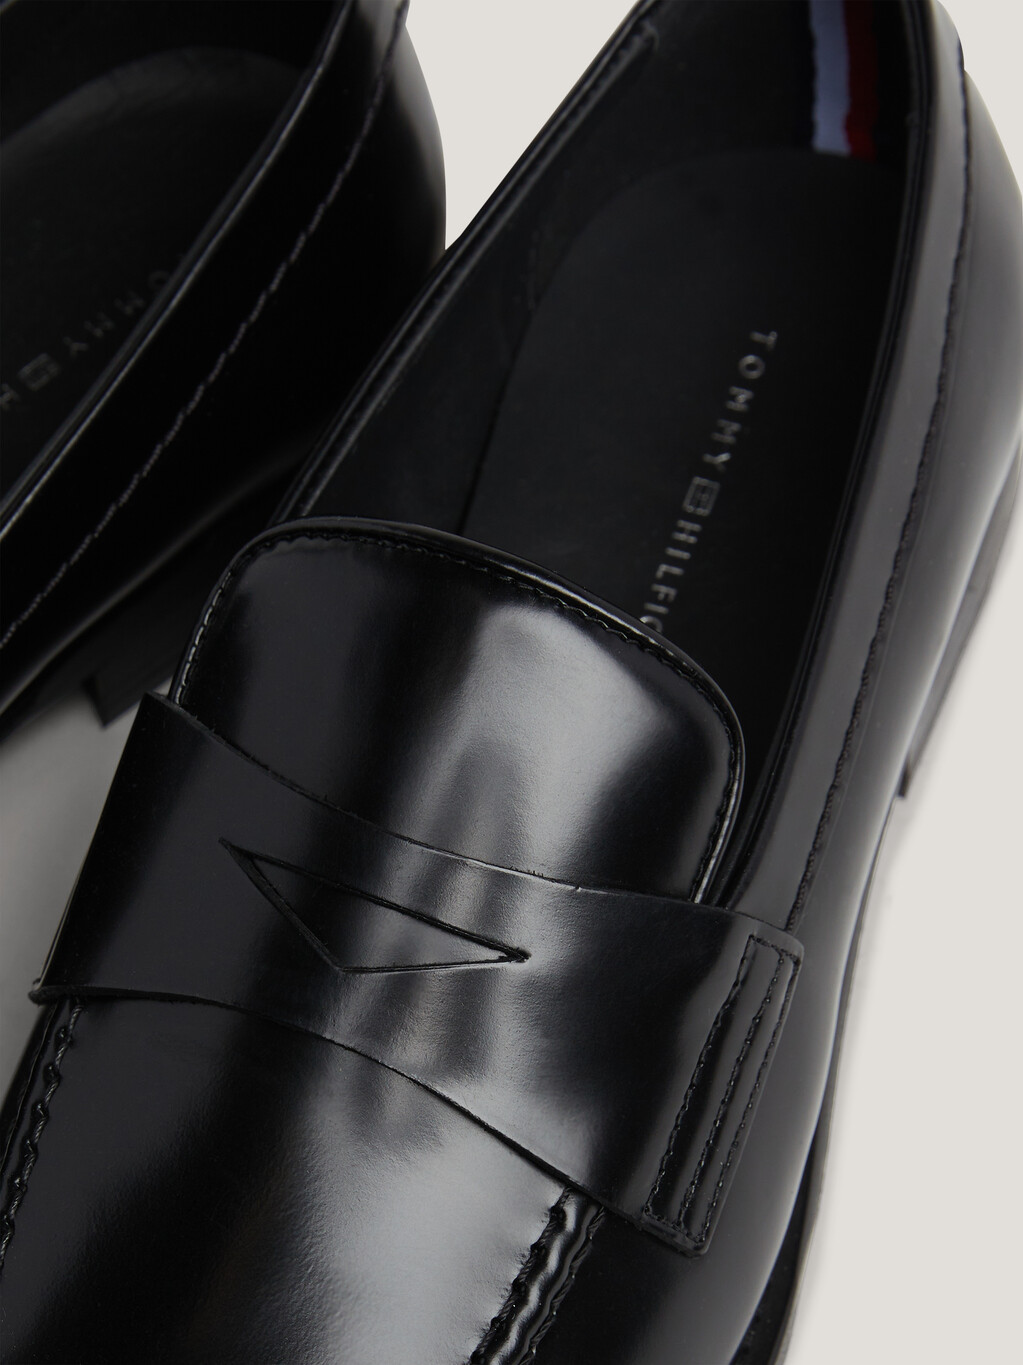 Hilfiger Thunit Patent Loafers, Black, hi-res